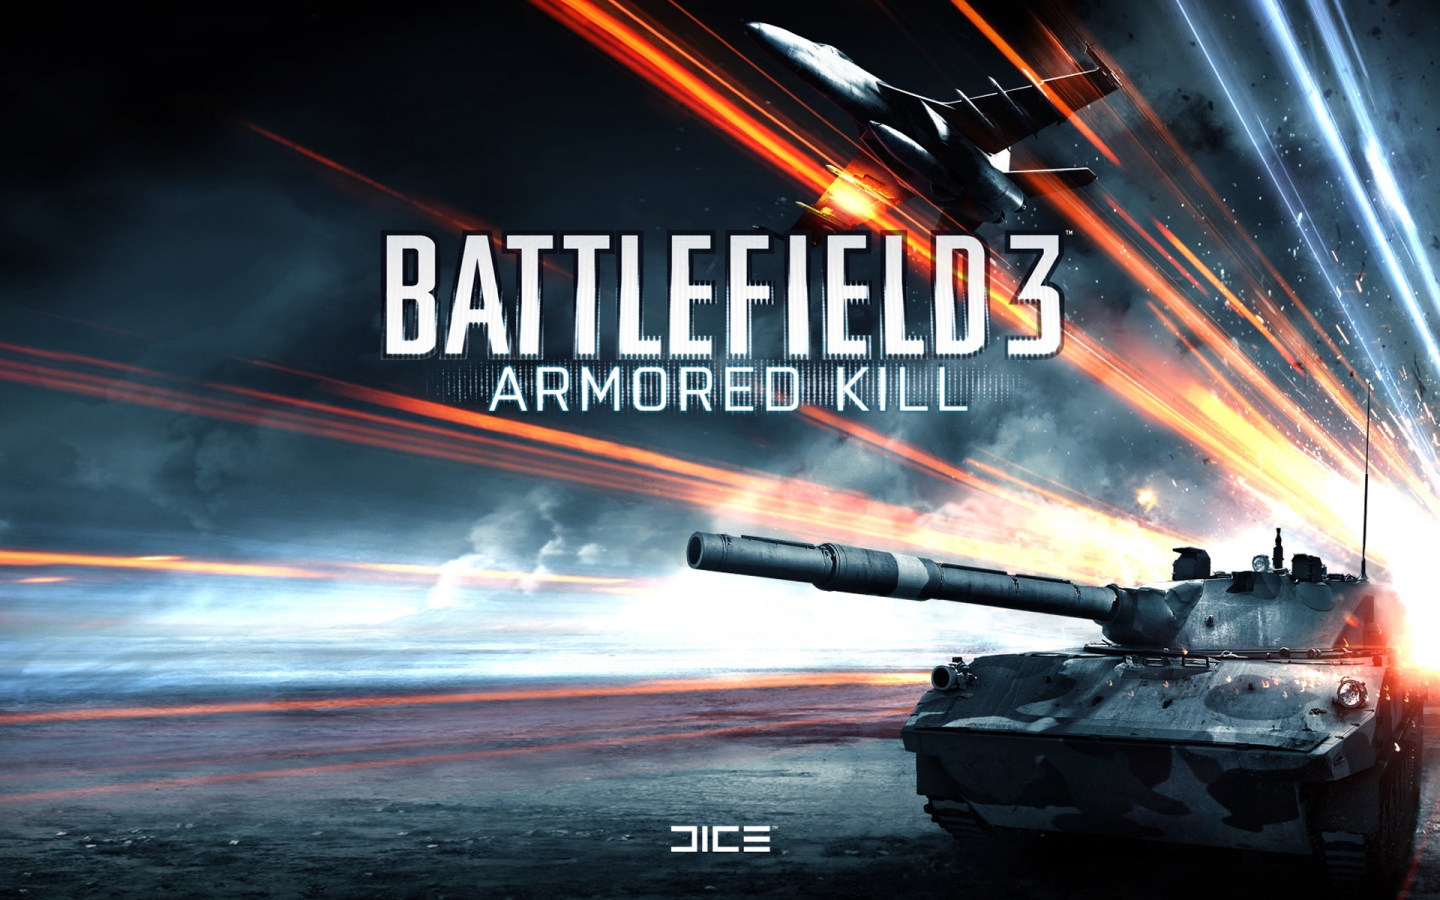 Battlefield 3 Armored Kill for 1440 x 900 widescreen resolution